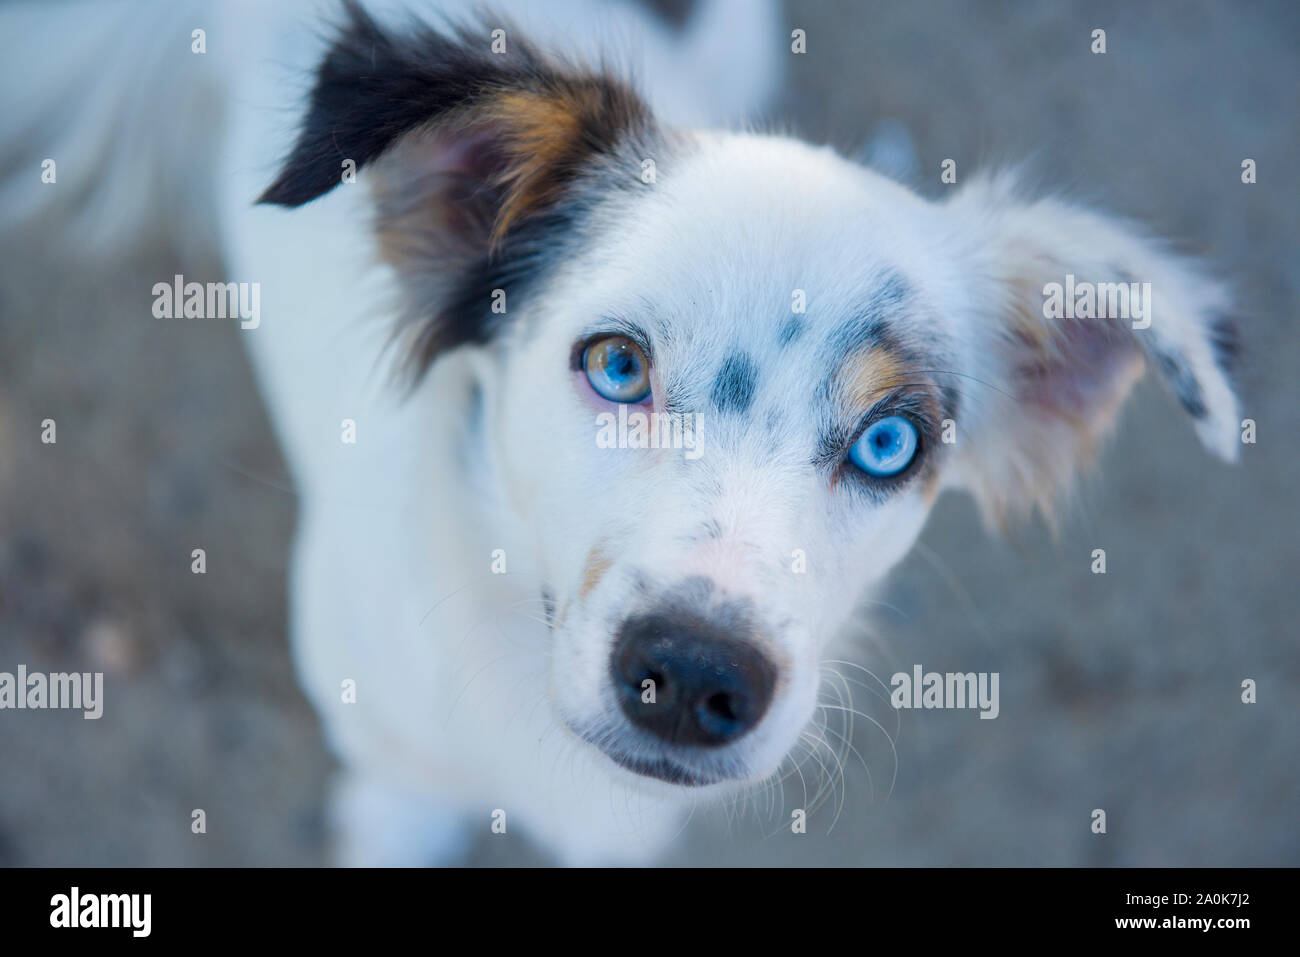 White Dog With Heterochromia Iridum With One Brown Eye And A Blue One Stock Photo Alamy